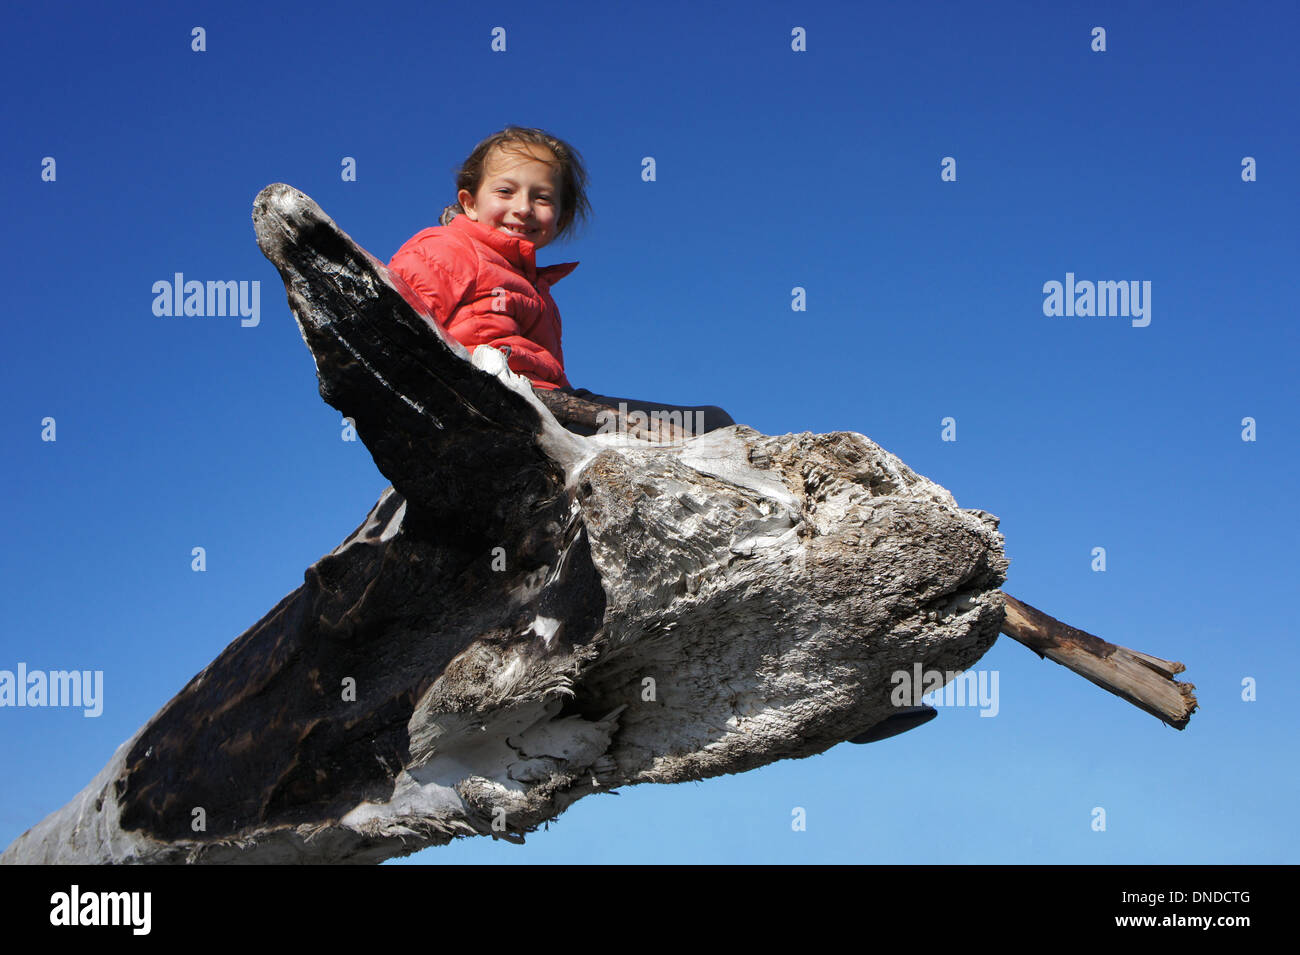 Girl sitting on a driftwood that looks like a whale breaching, Alaska Stock Photo